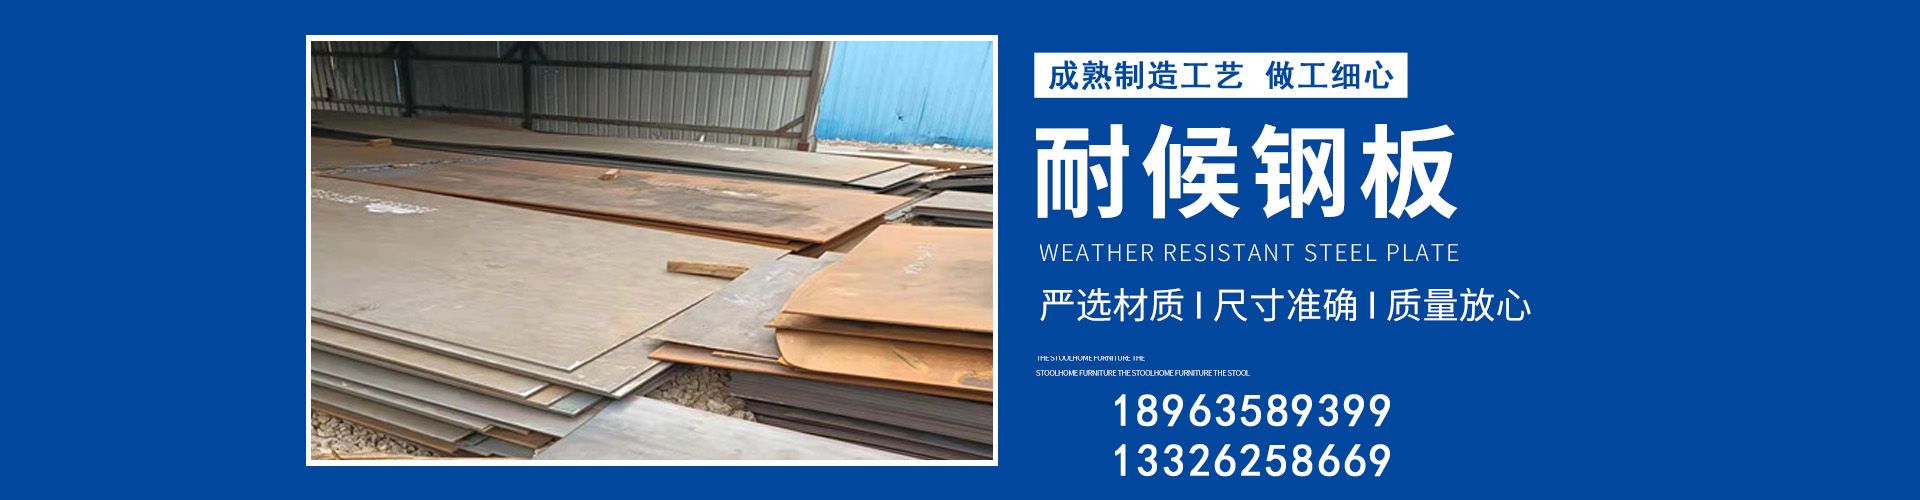 NM500耐磨钢板、北京本地NM500耐磨钢板、北京、北京NM500耐磨钢板